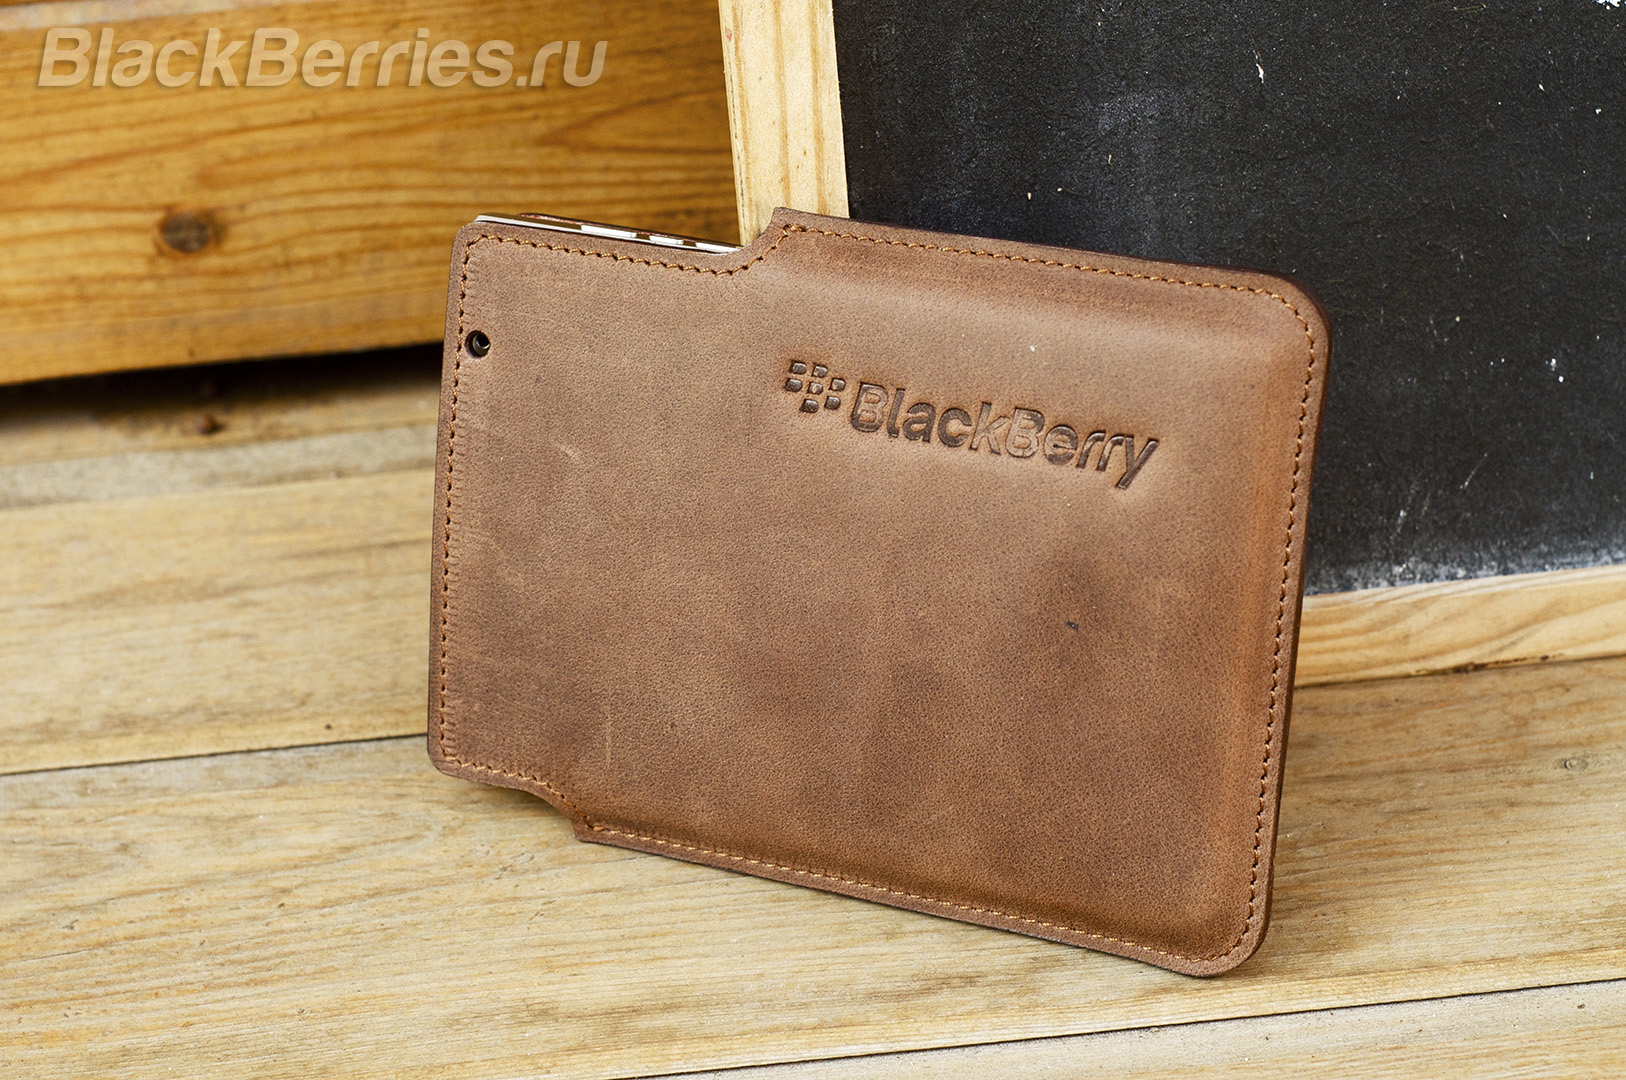 BlackBerry-Passport-Silver-Cases-26